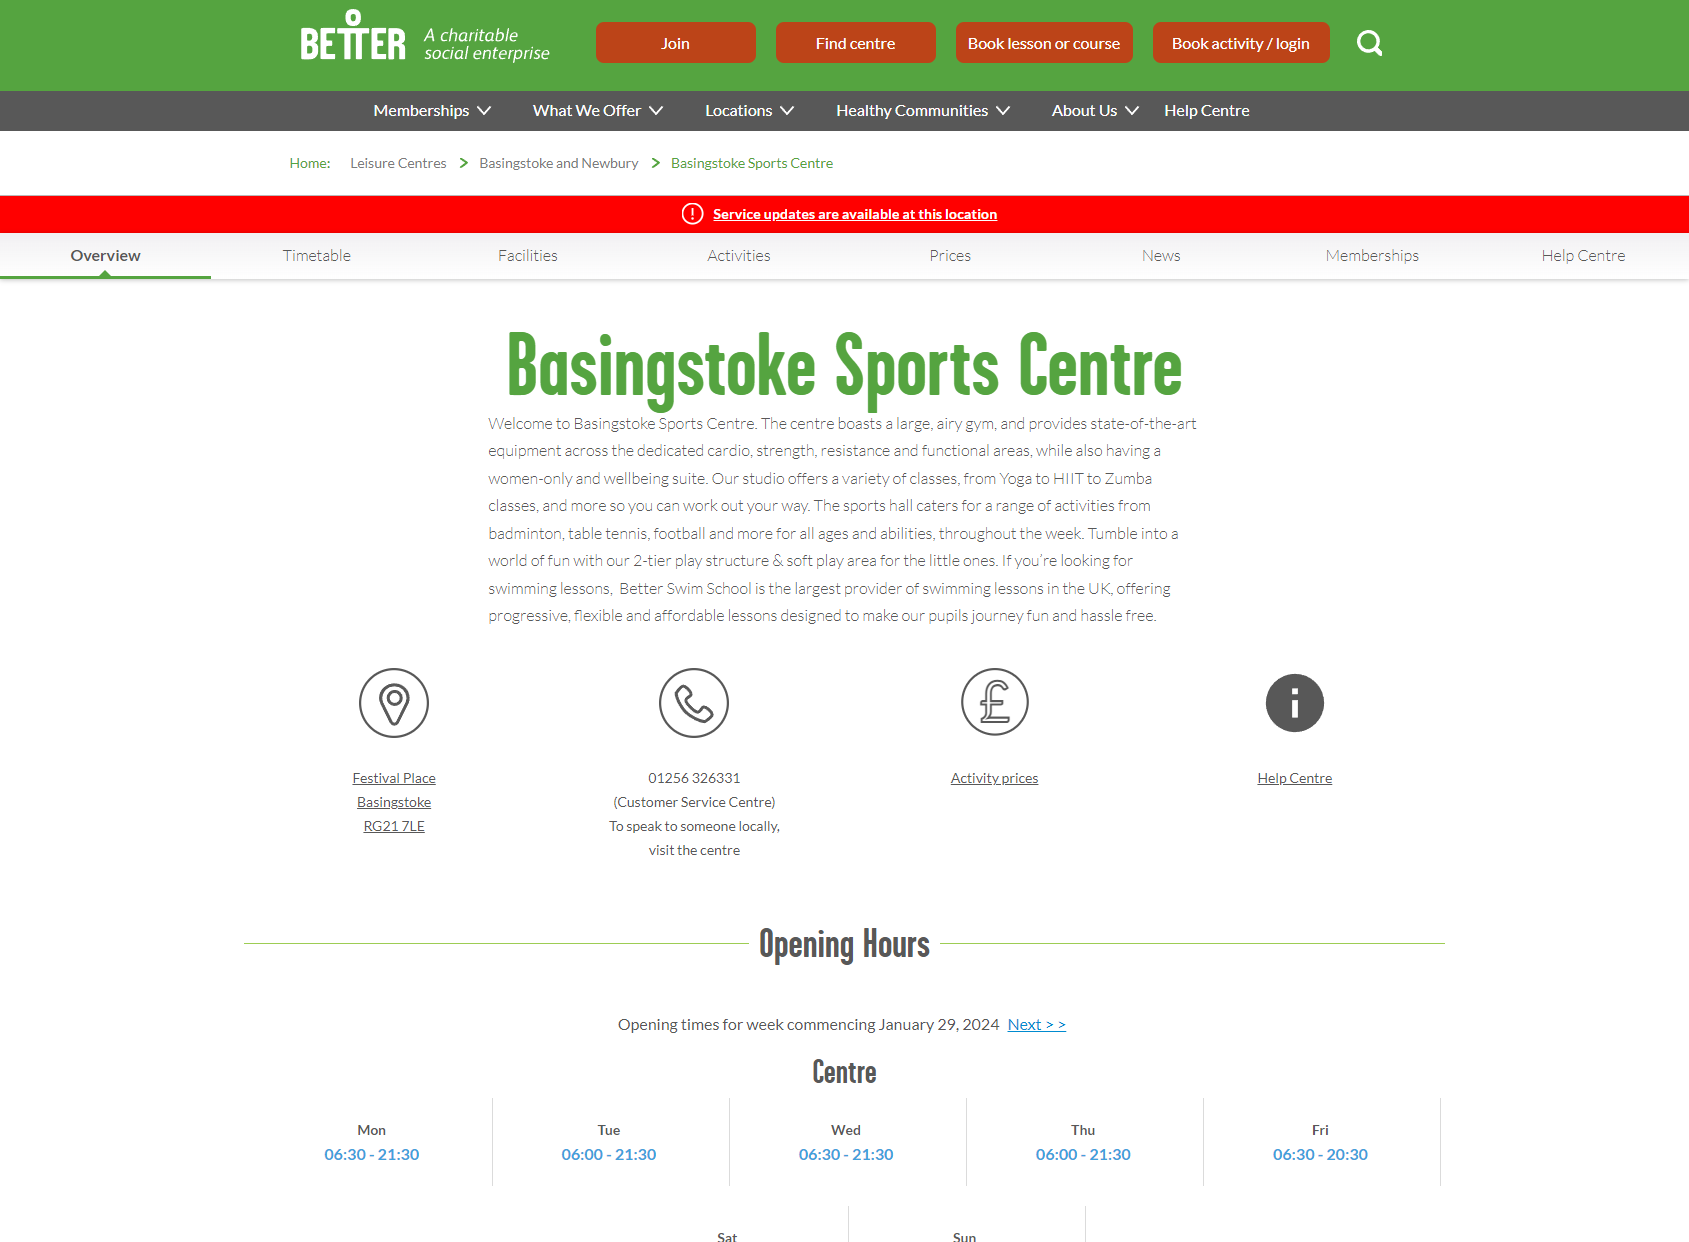 Basingstoke Sports Centre